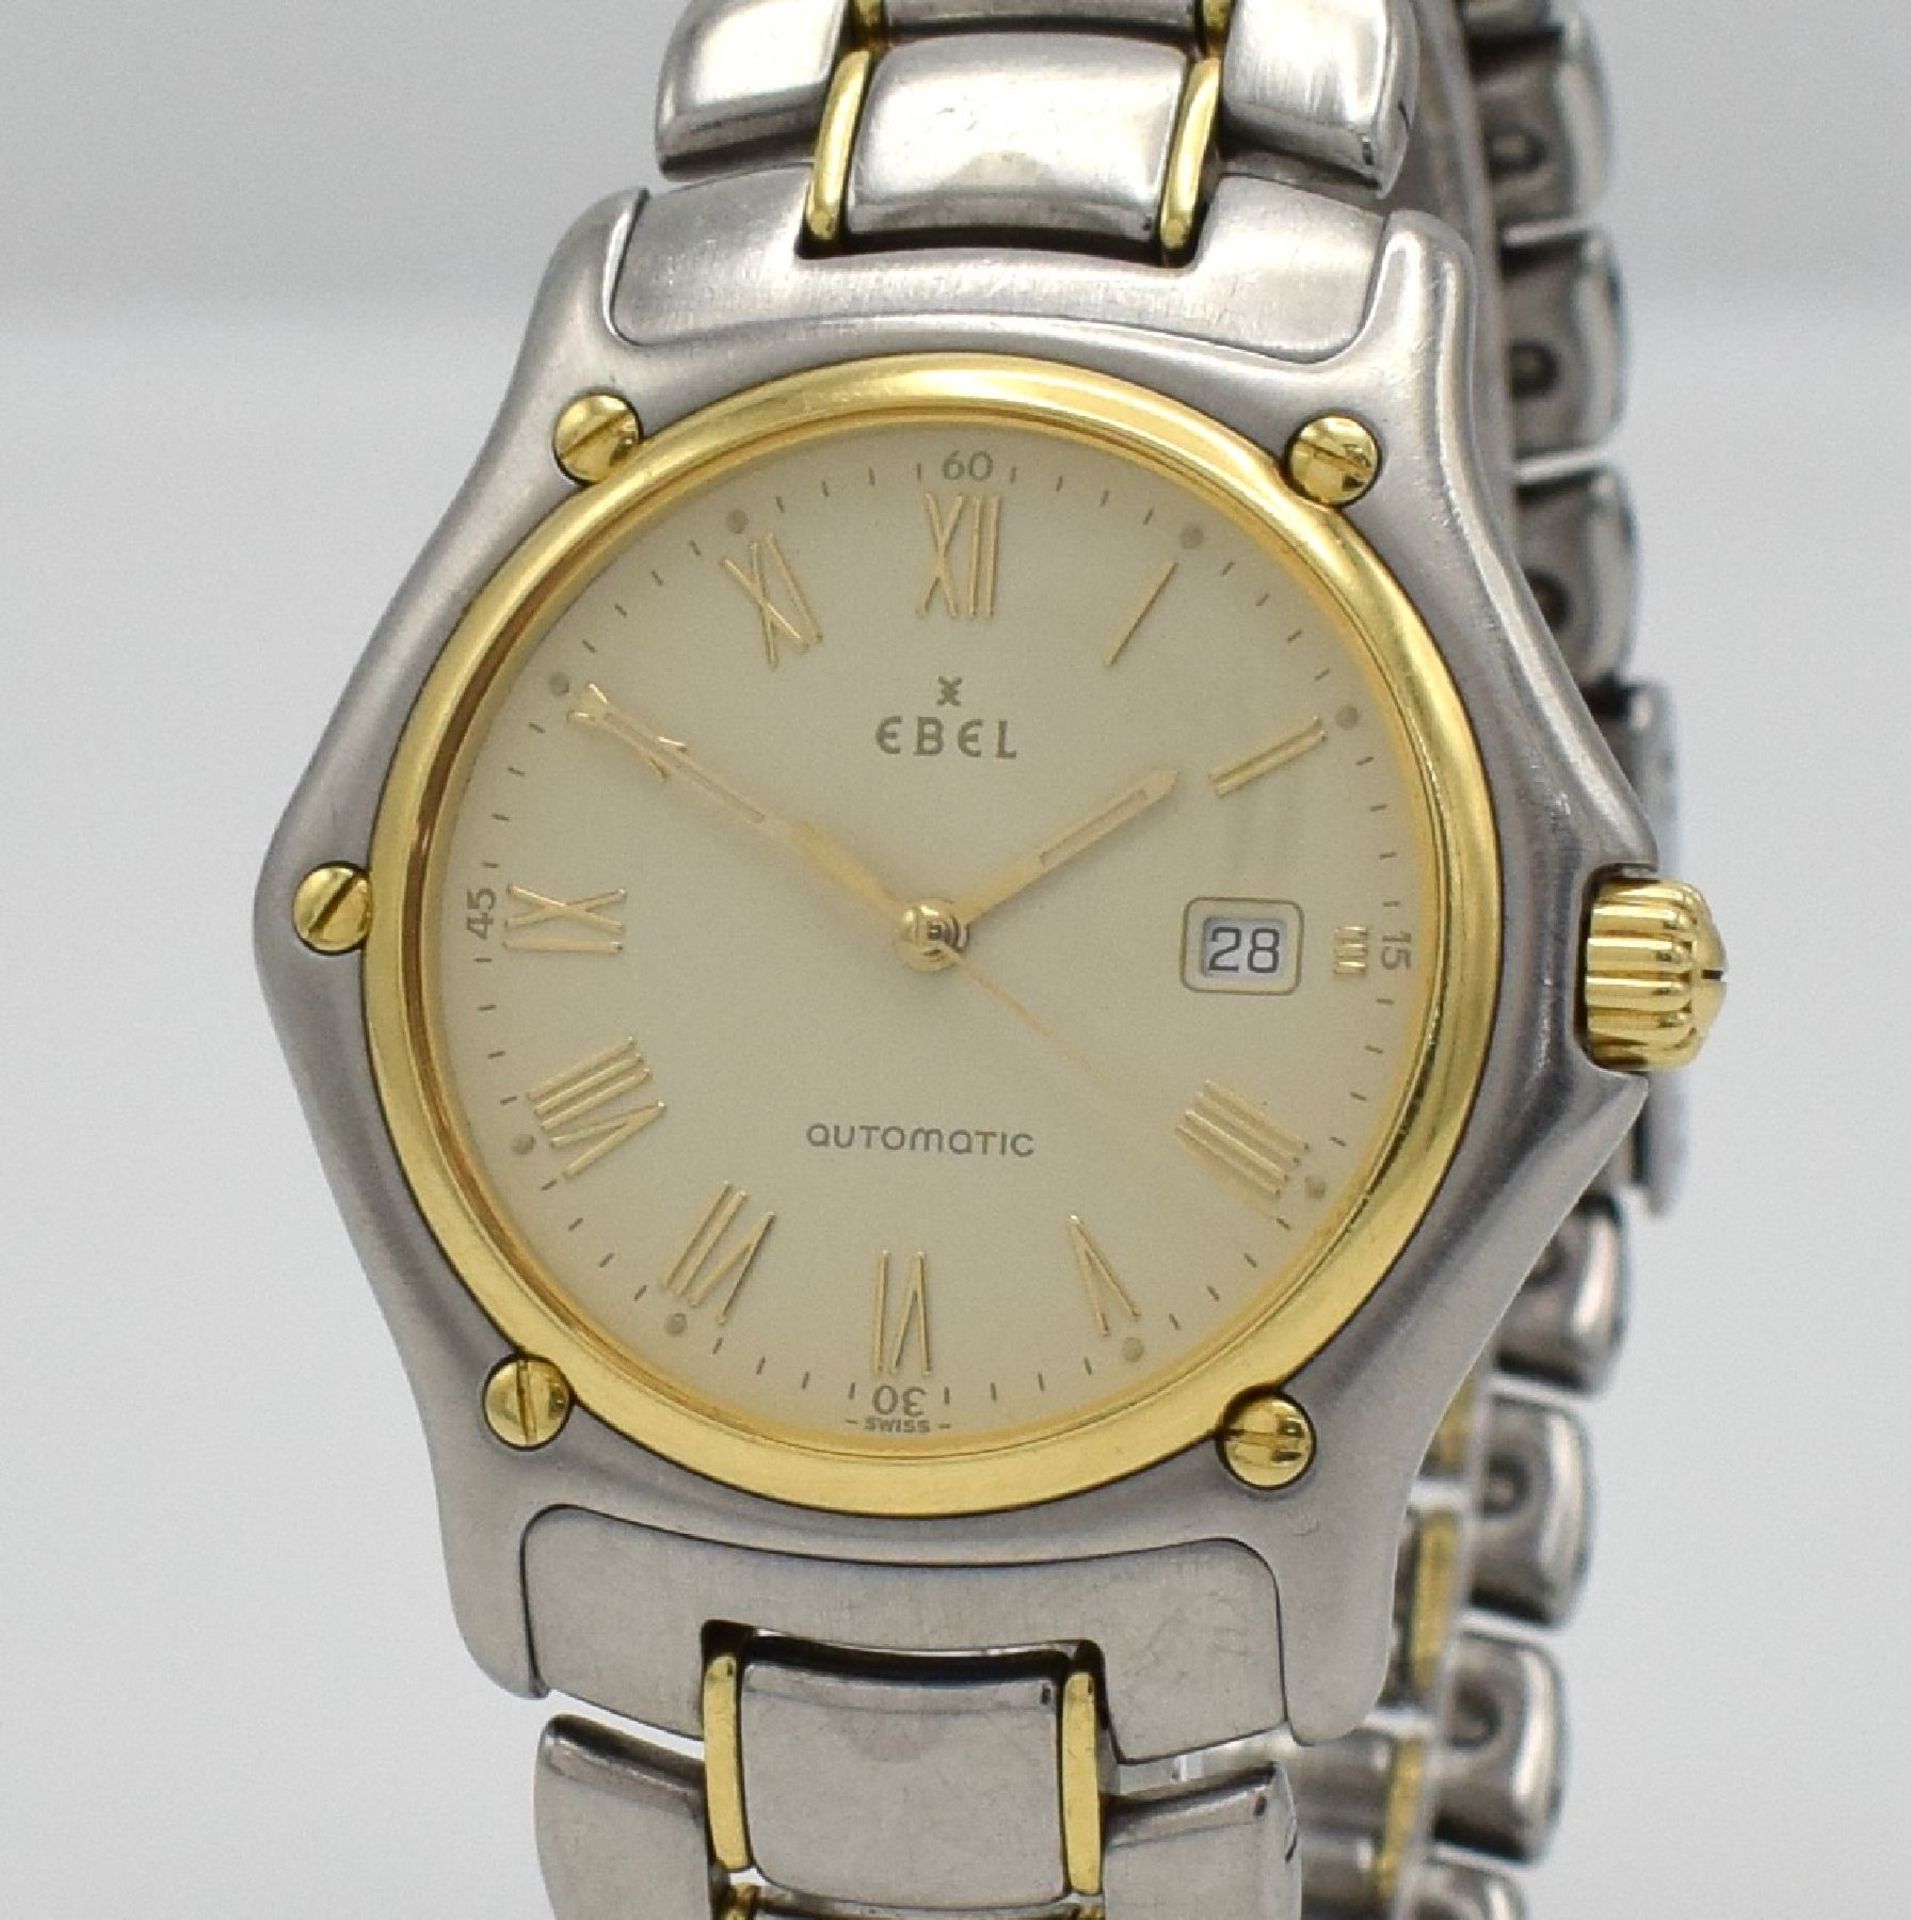 EBEL 1911 wristwatch in stainless steel/gold, Switzerland sold according to warranty card inMay - Bild 4 aus 10